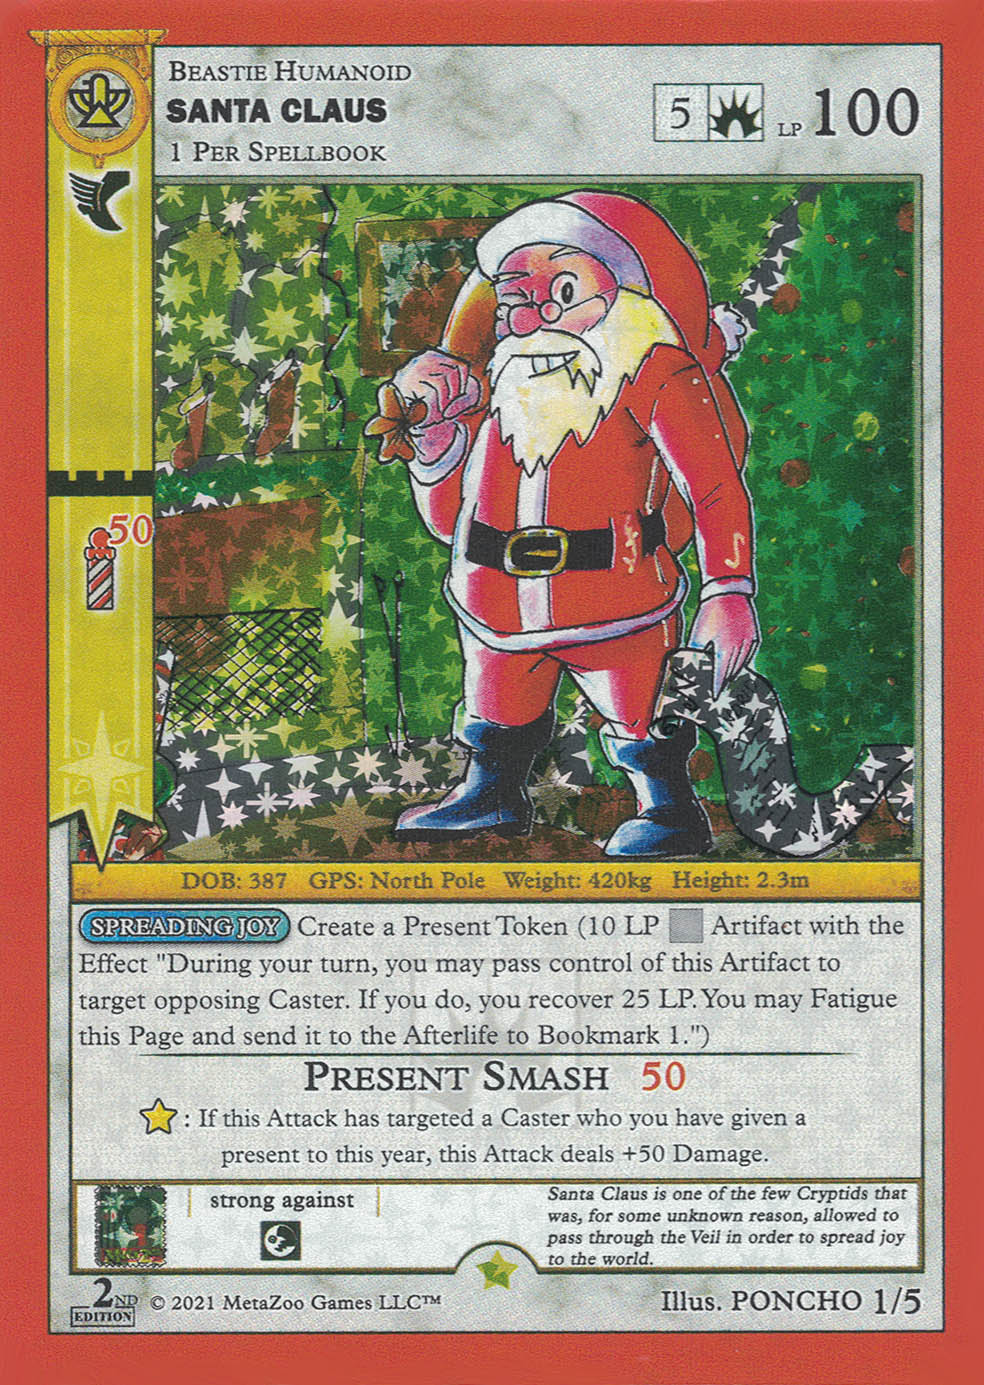 2nd Ed 2020 - Santa Claus - Beastie Humanoid - Poncho - 1-5 scan